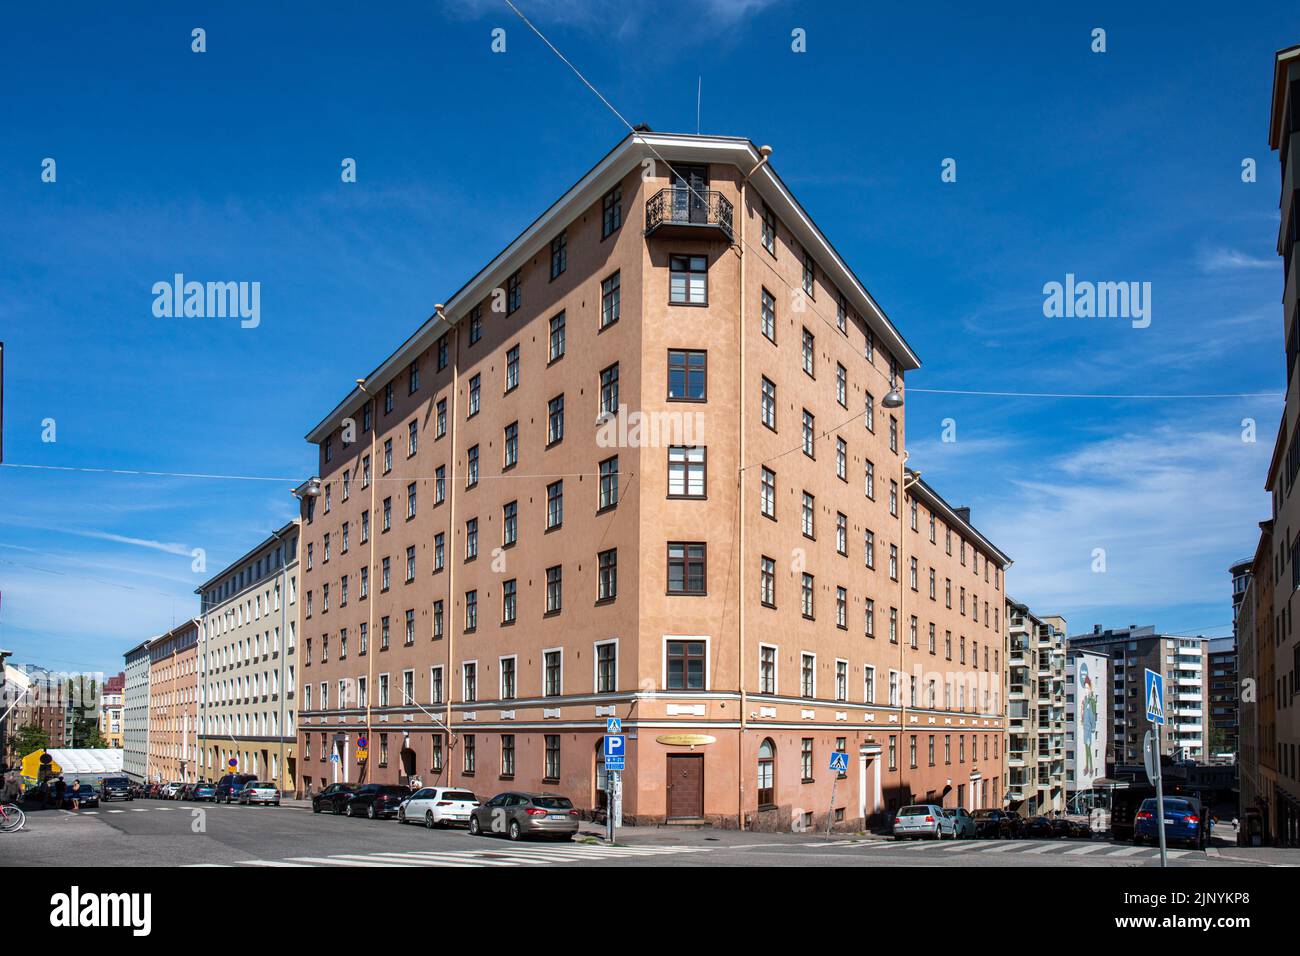 Residential building on the corner Pengerkatu and Torkkelinkatu in Kallio district of Helsinki, Finland Stock Photo